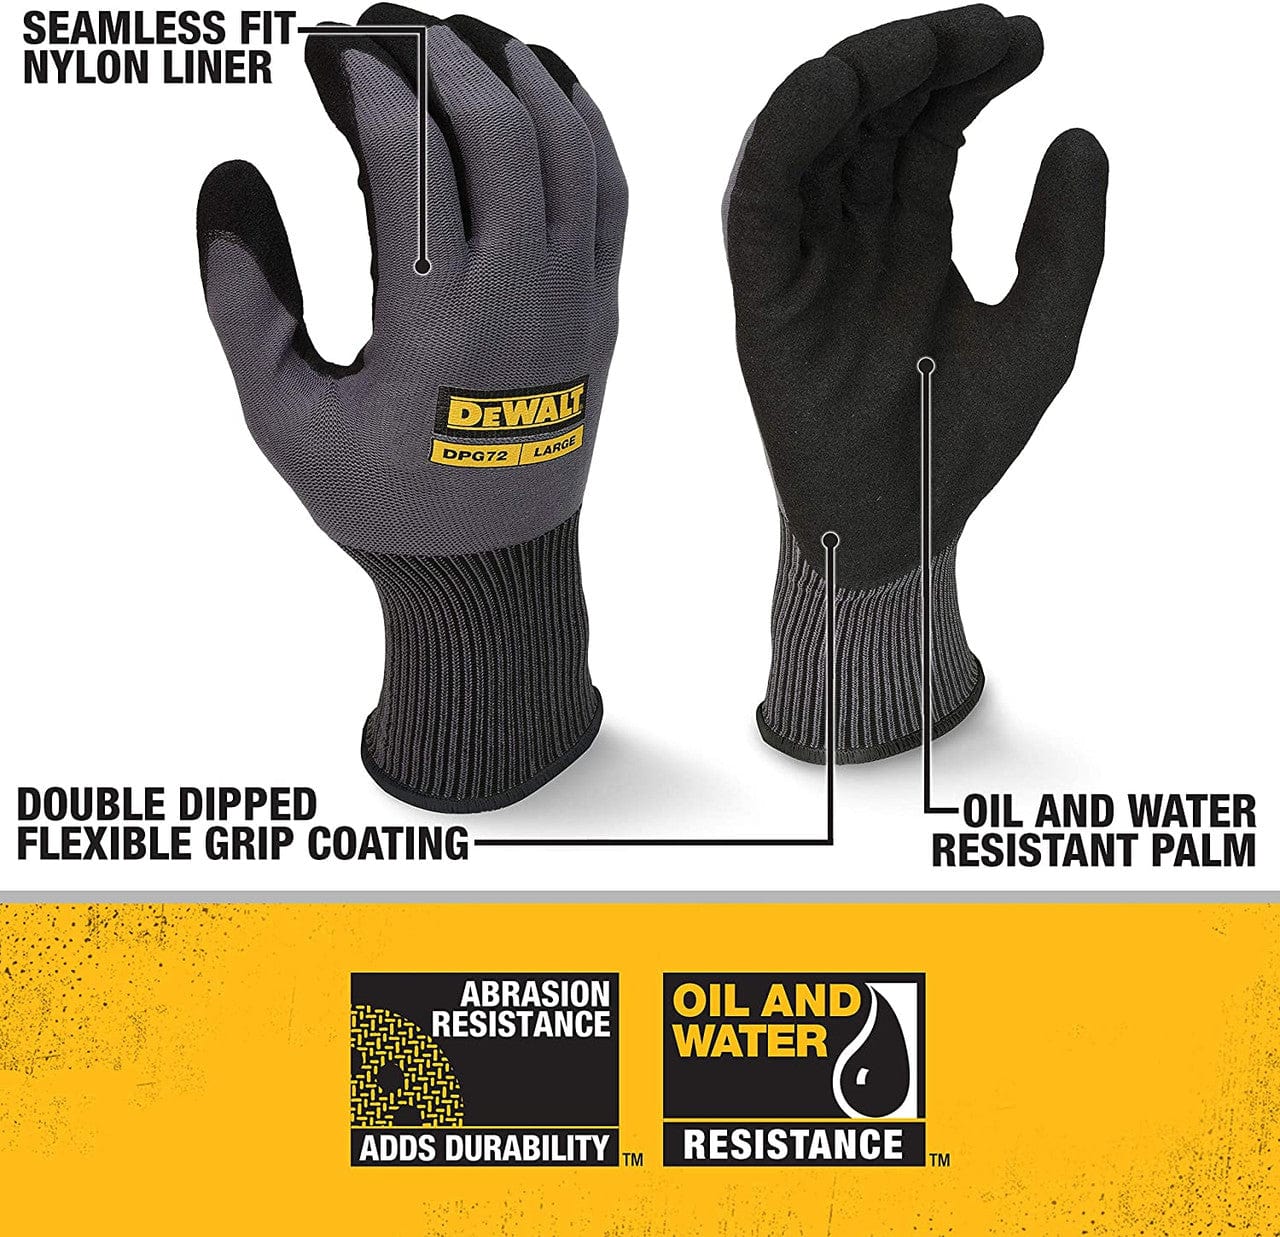 DeWalt DPG72 Flexible Durable Grip Work Gloves Key Features